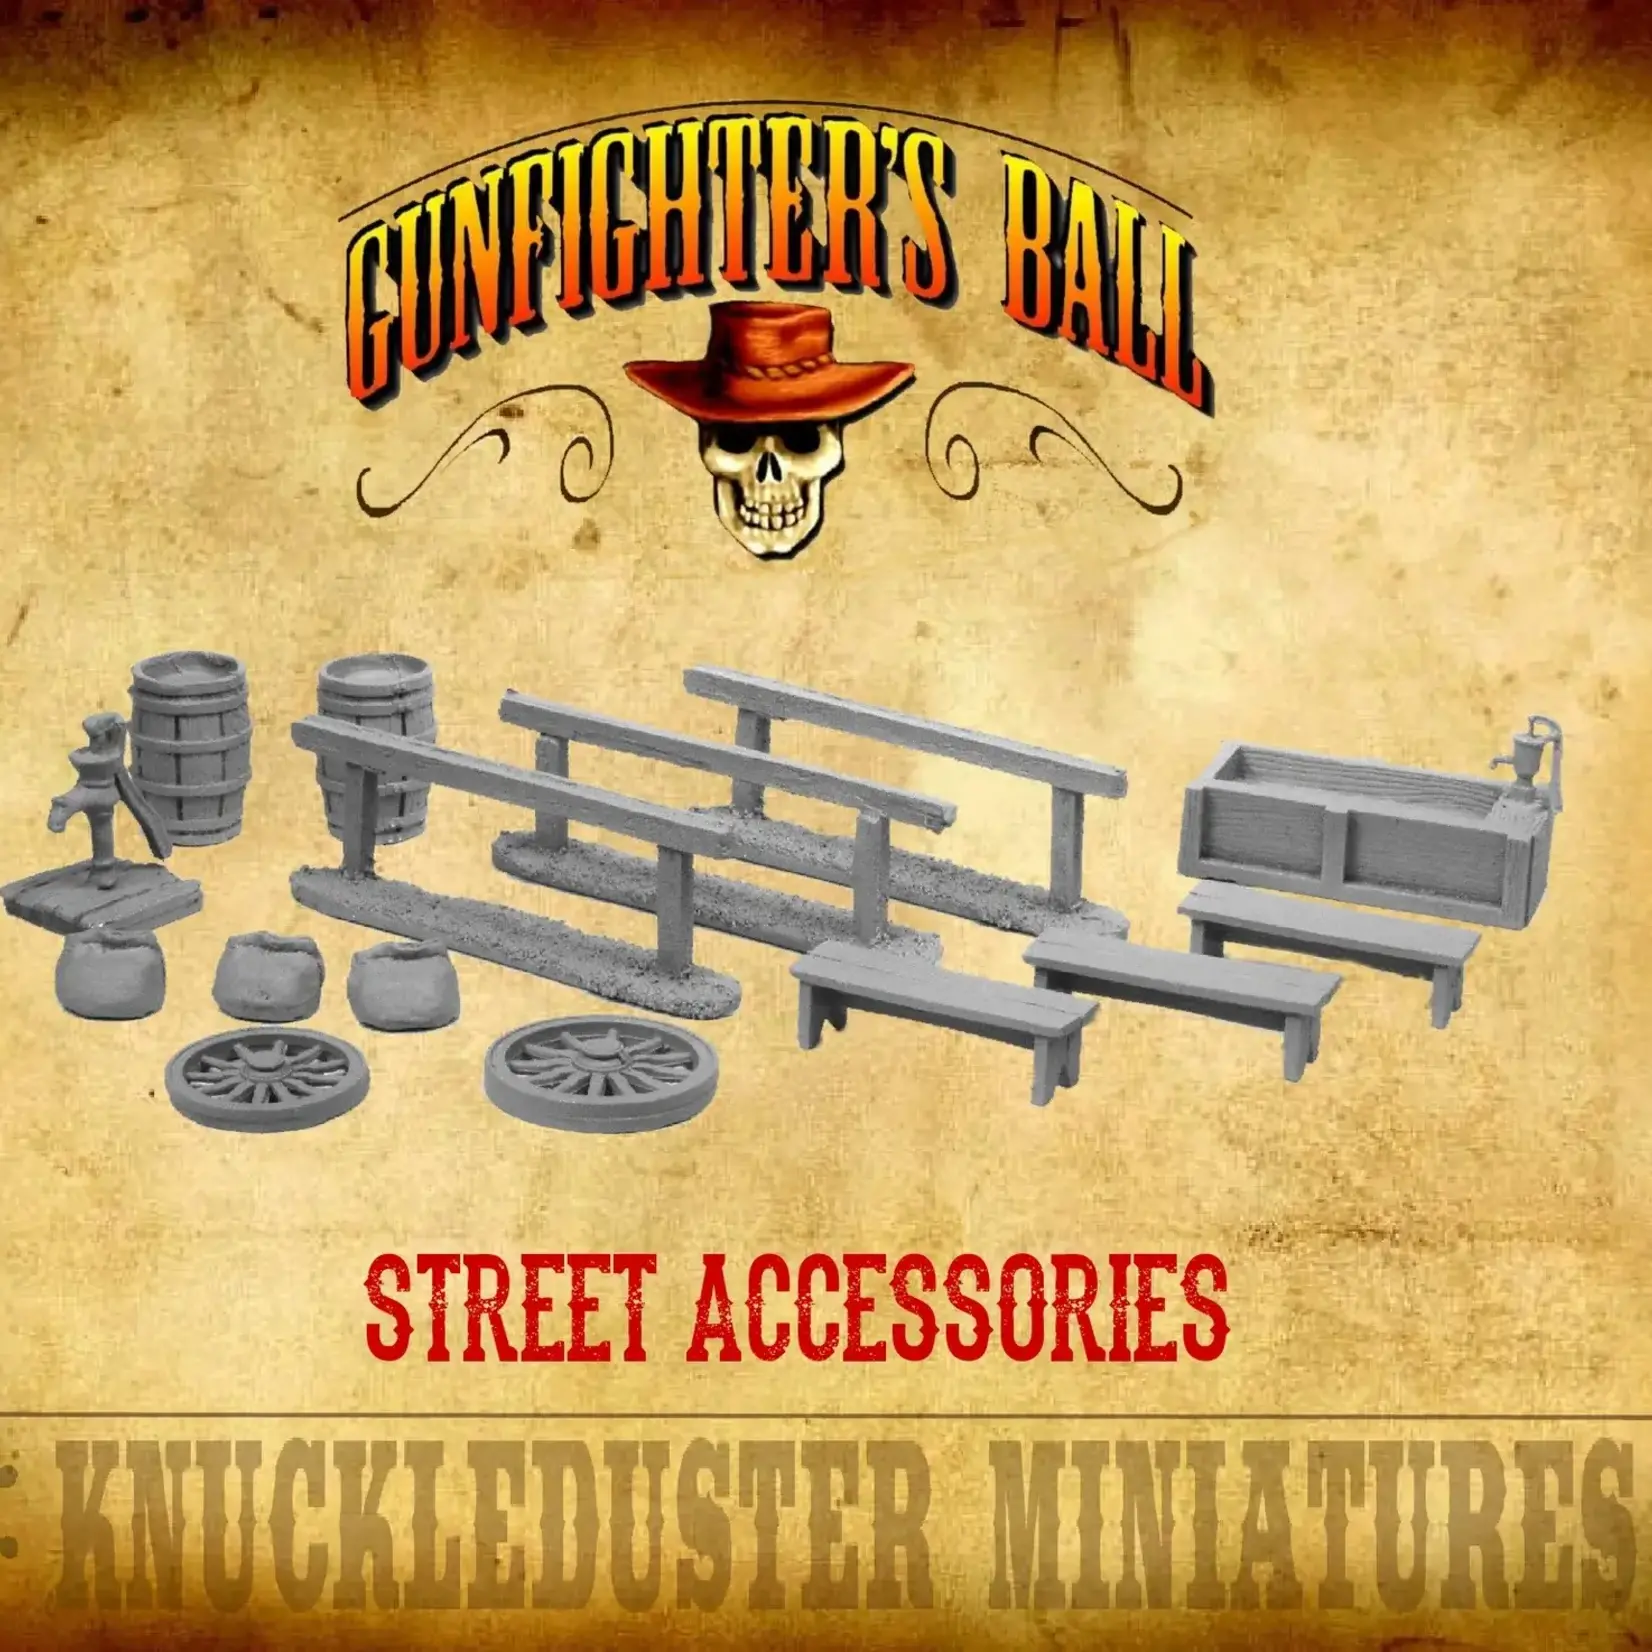 Knuckleduster Miniatures Street Accessories